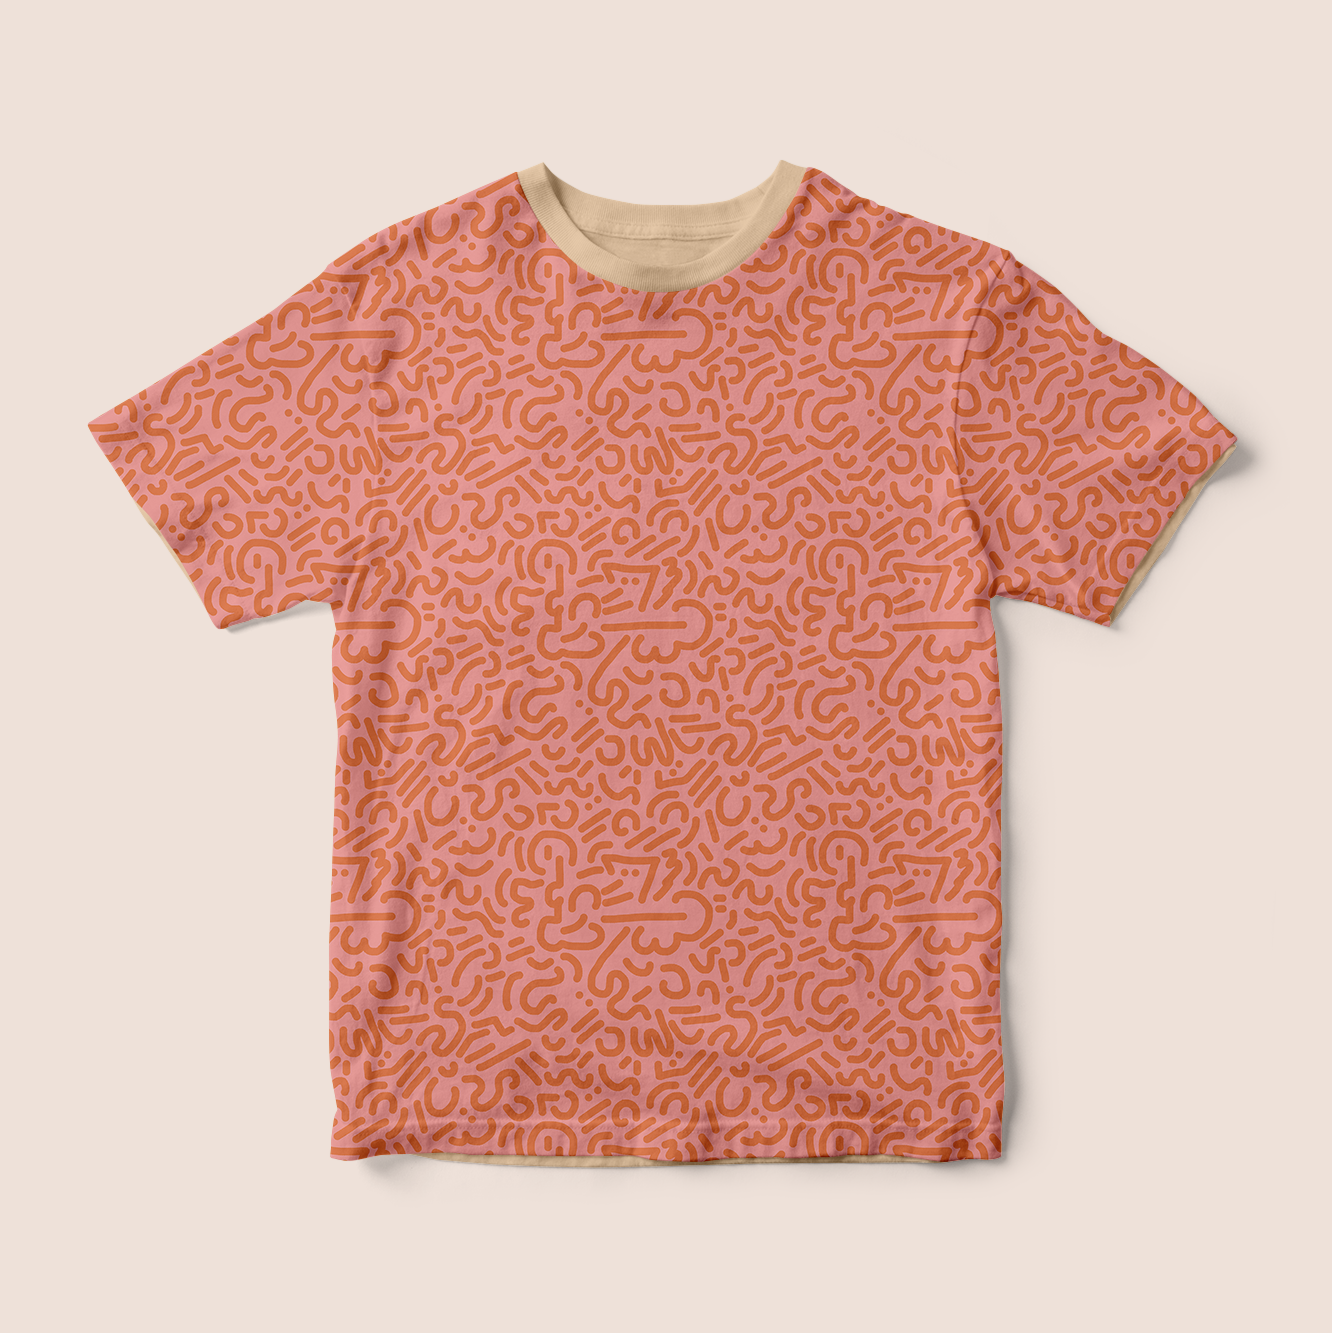 Art millennial II pattern design on recycled fabric t-shirt mockup